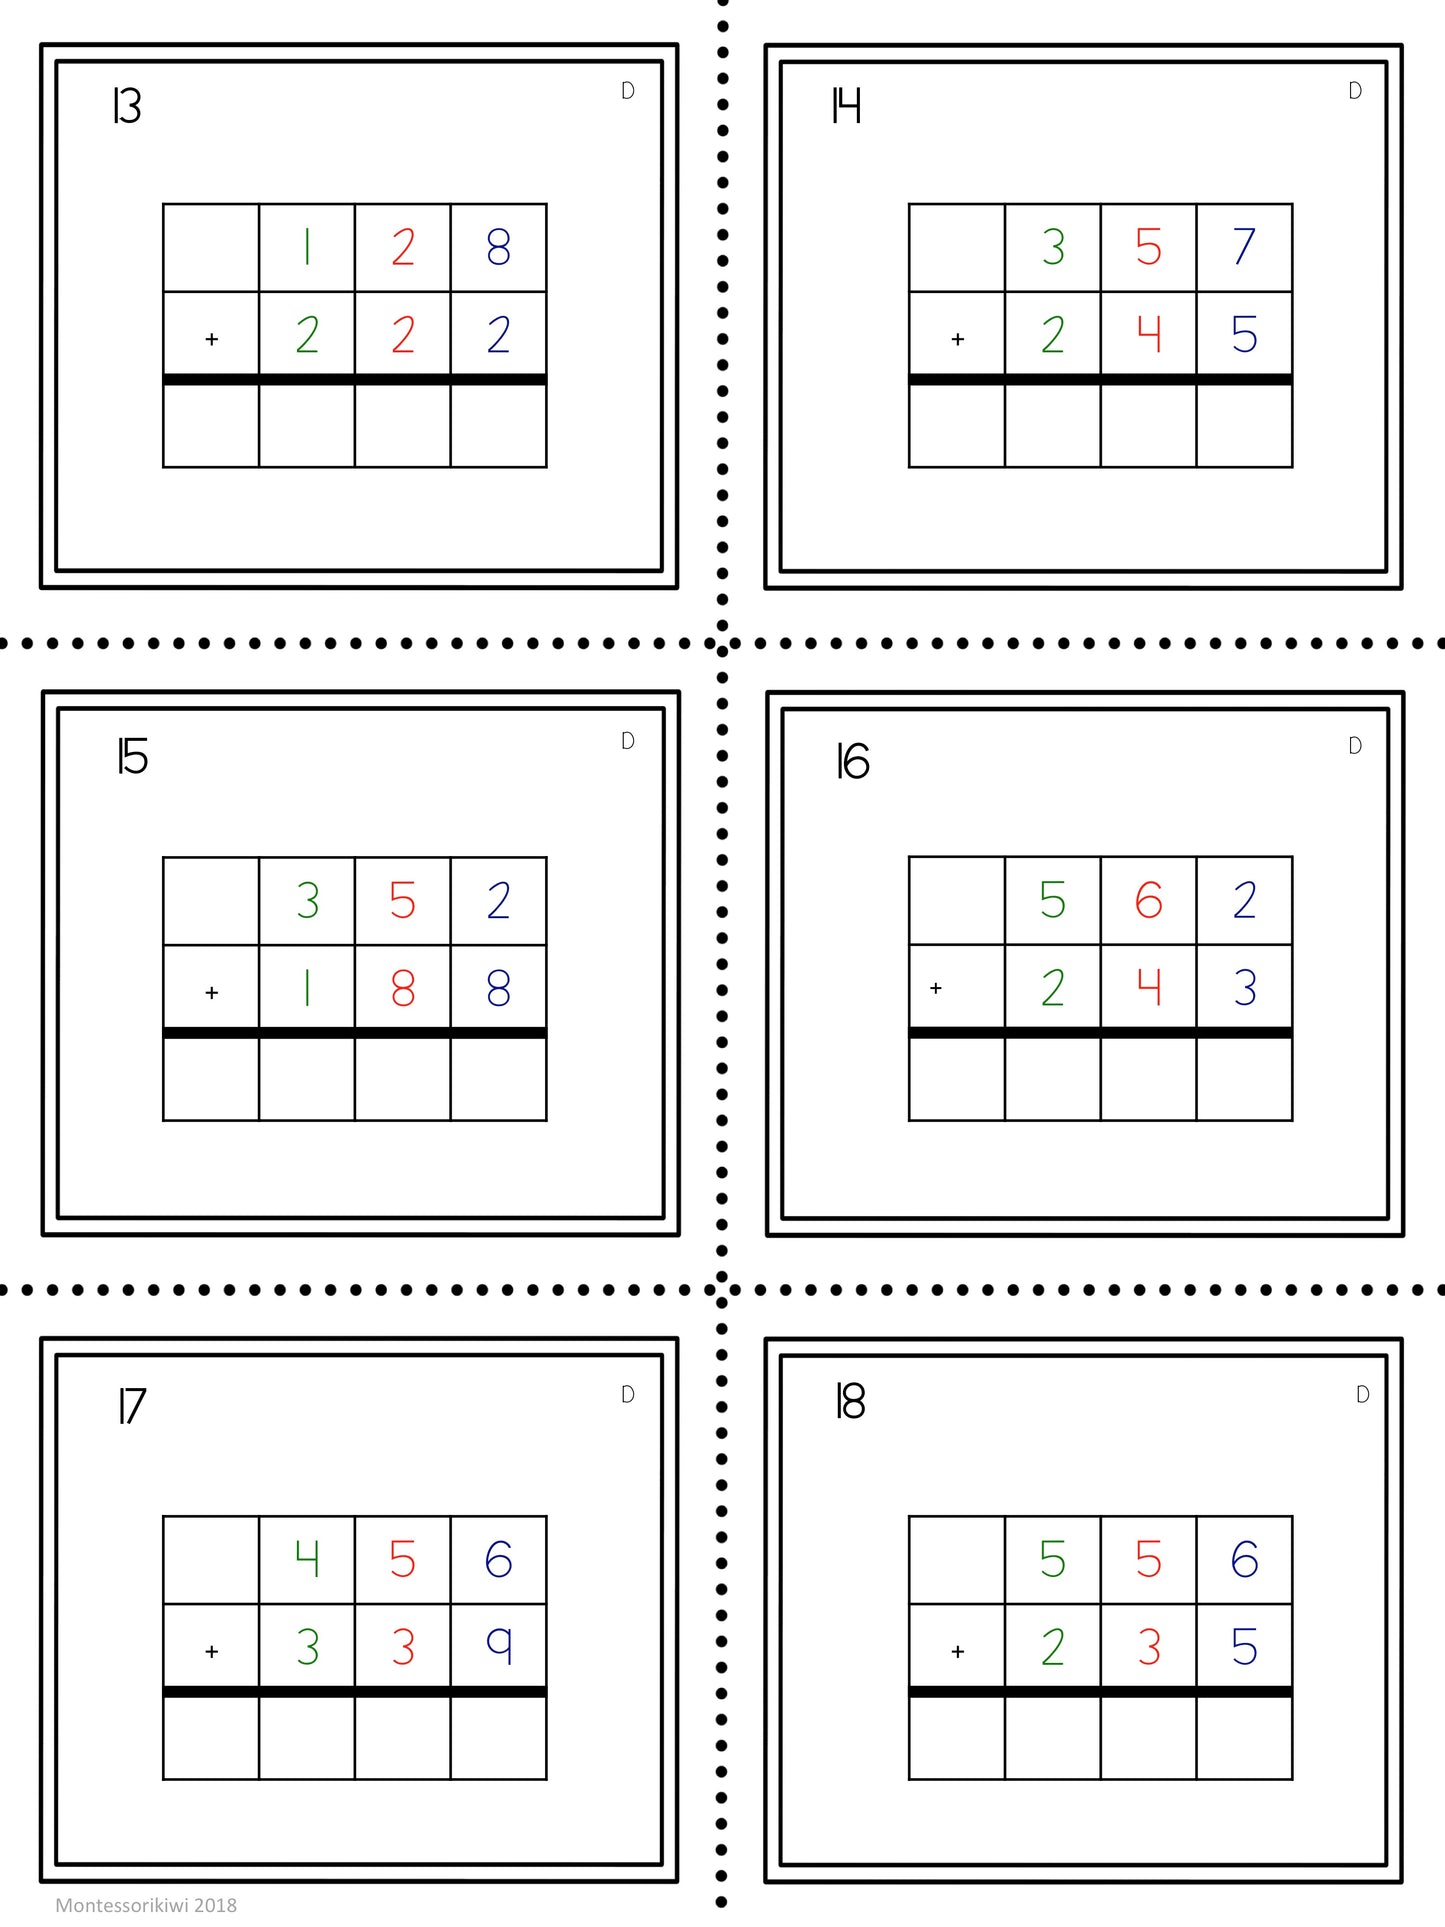 Three digit equations (Montessori) - montessorikiwi